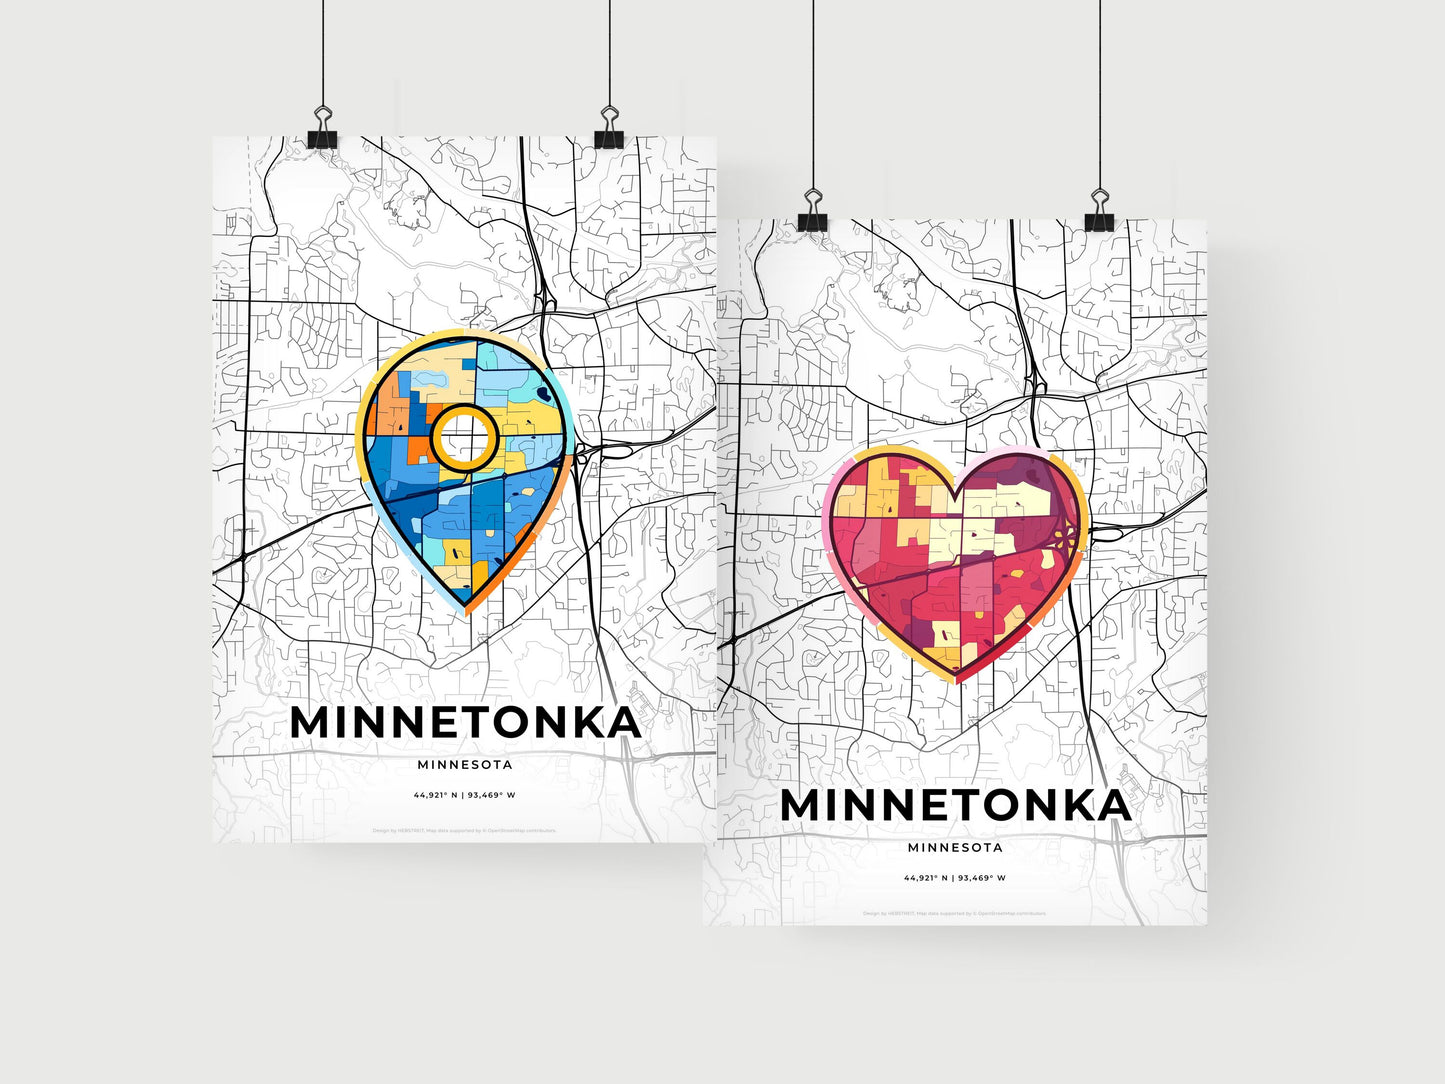 MINNETONKA MINNESOTA minimal art map with a colorful icon.